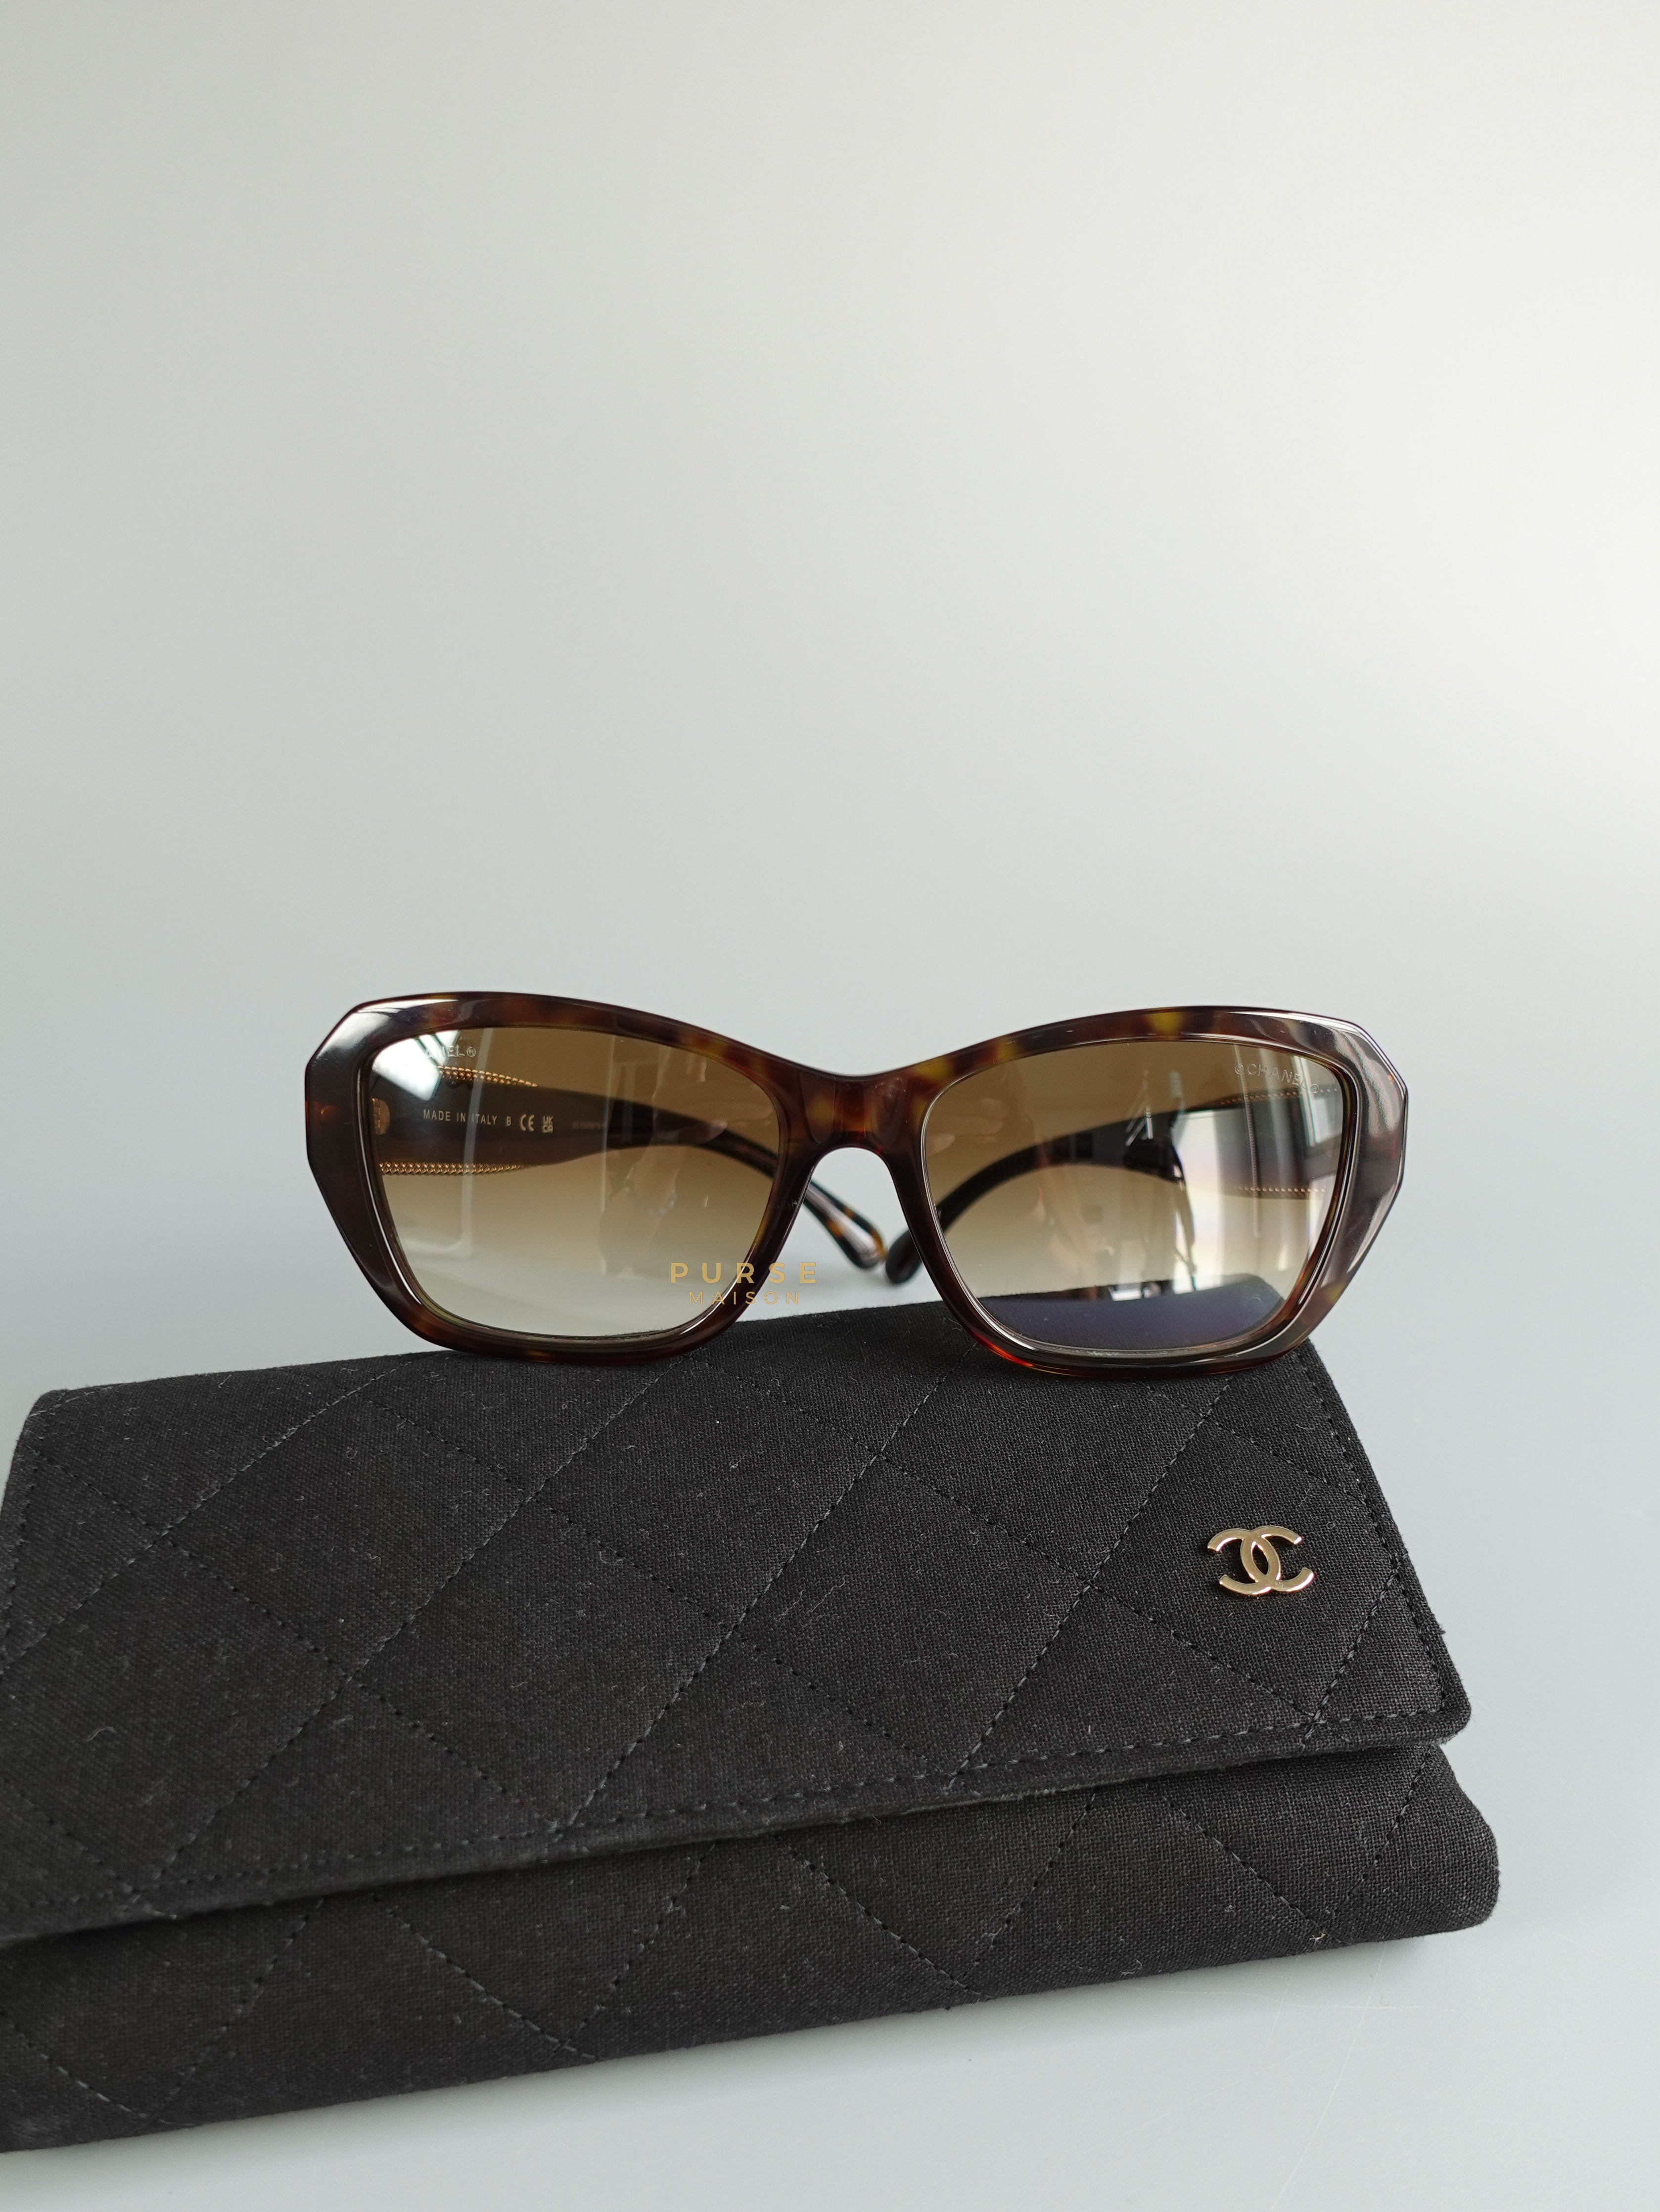 Chanel Butterfly Dark Tortoise/Brown Gradient Sunglasses | Purse Maison Luxury Bags Shop